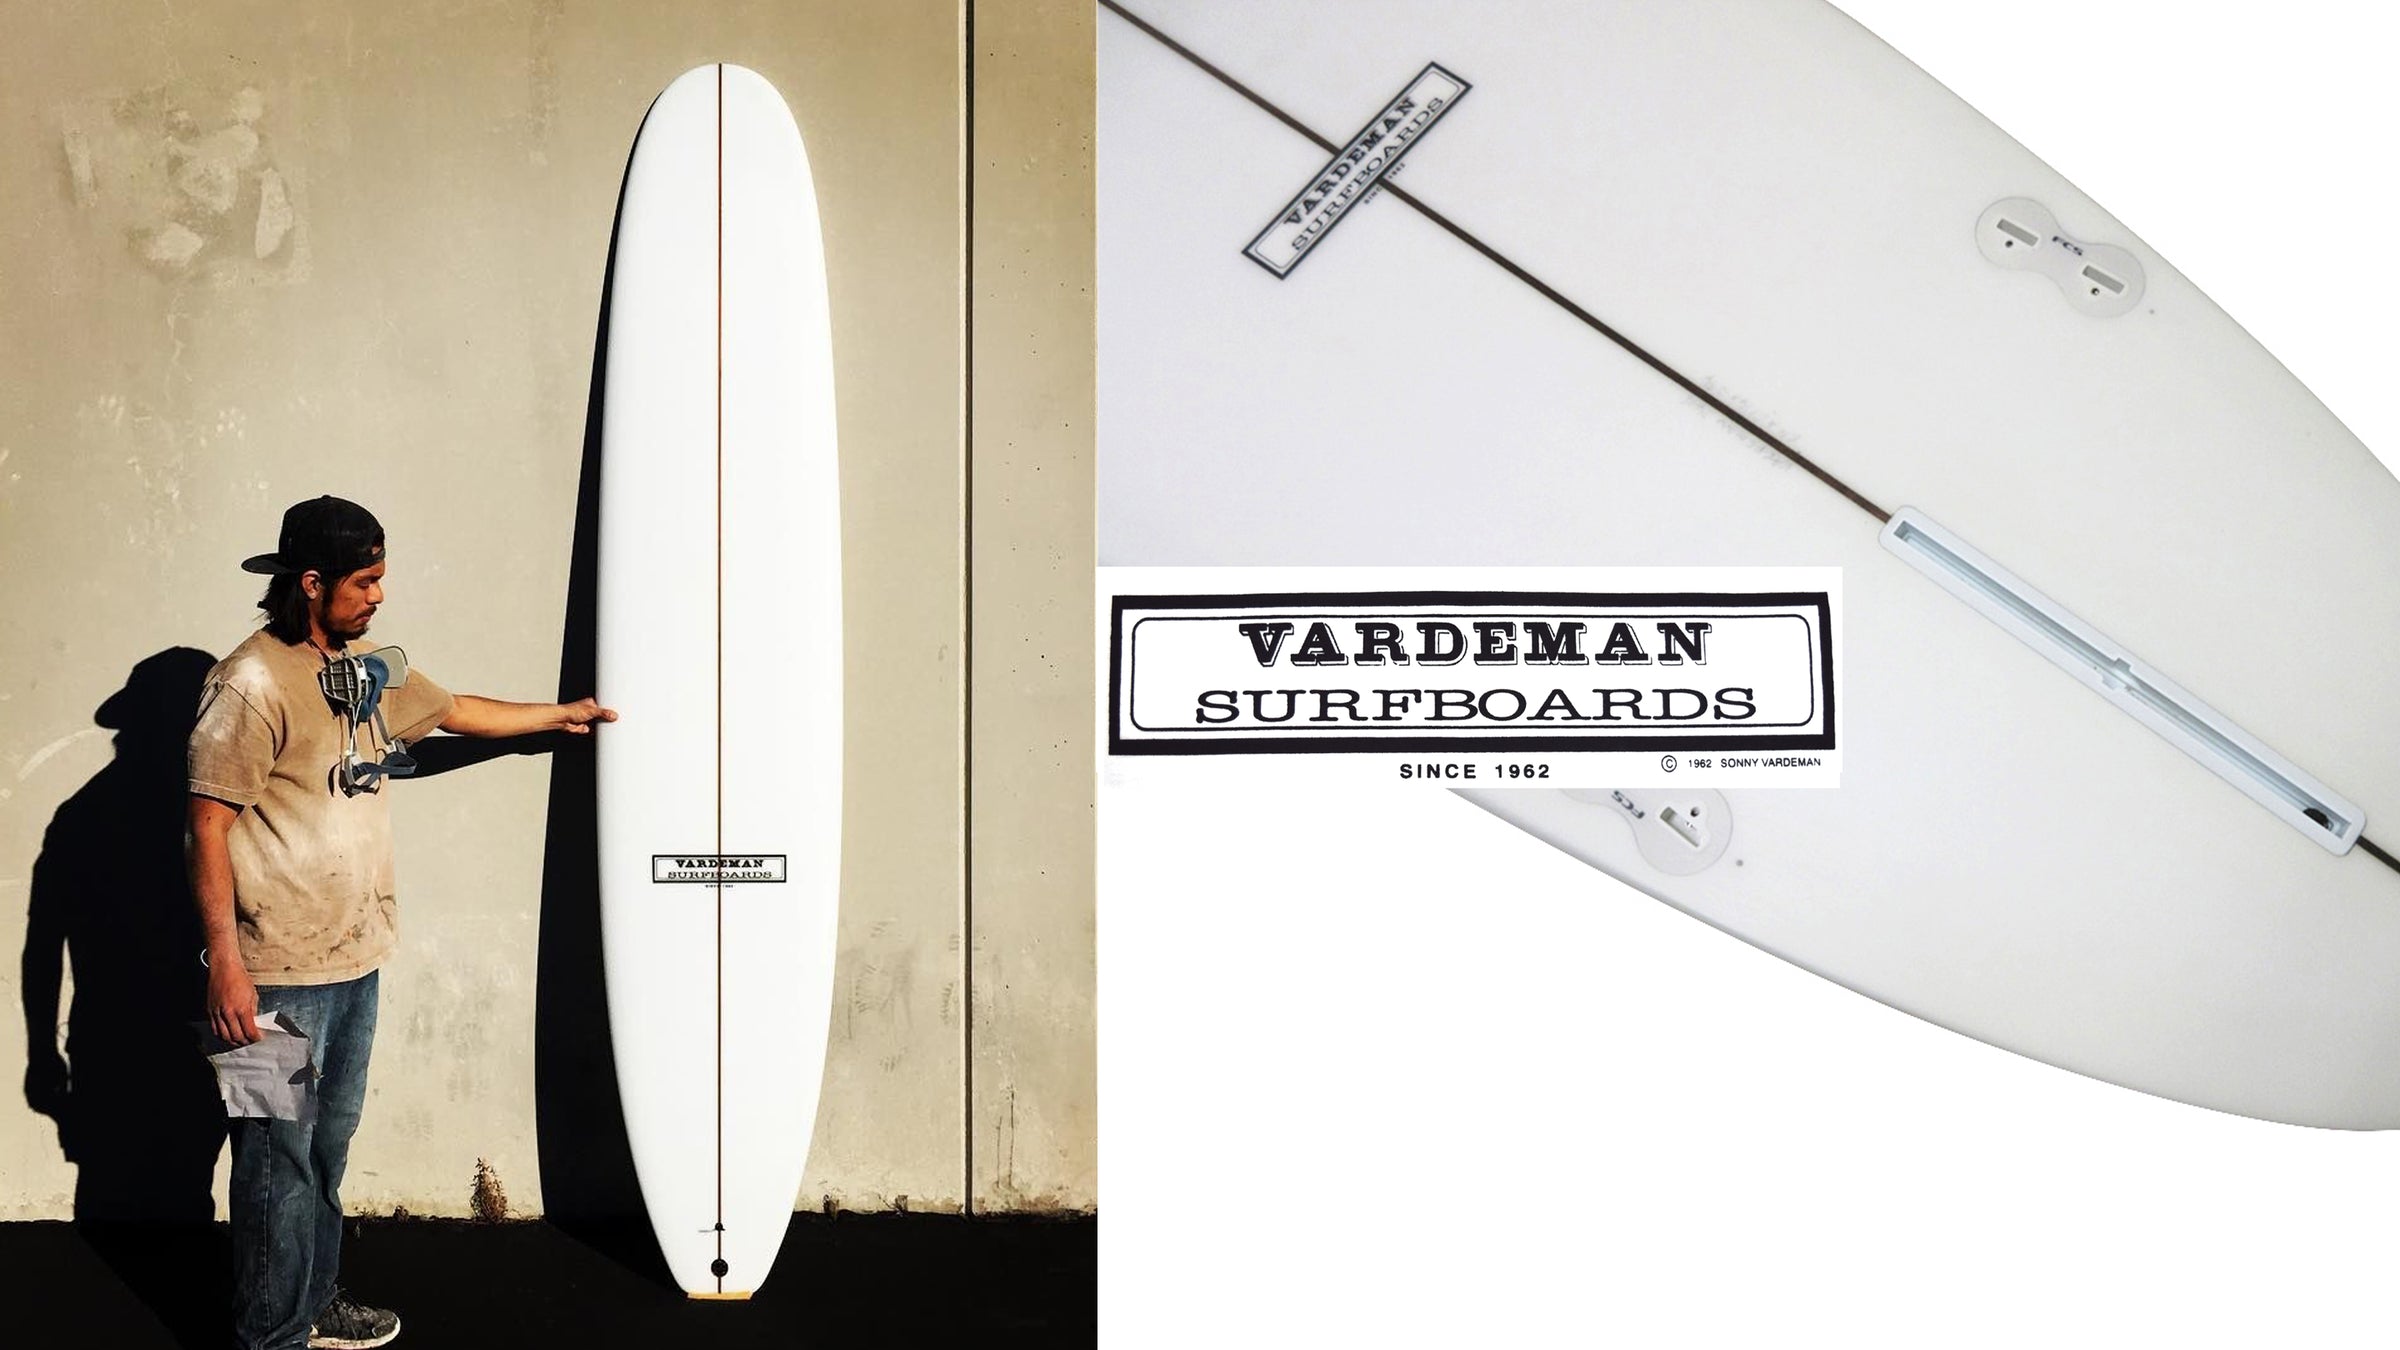 Vardeman Surfboards